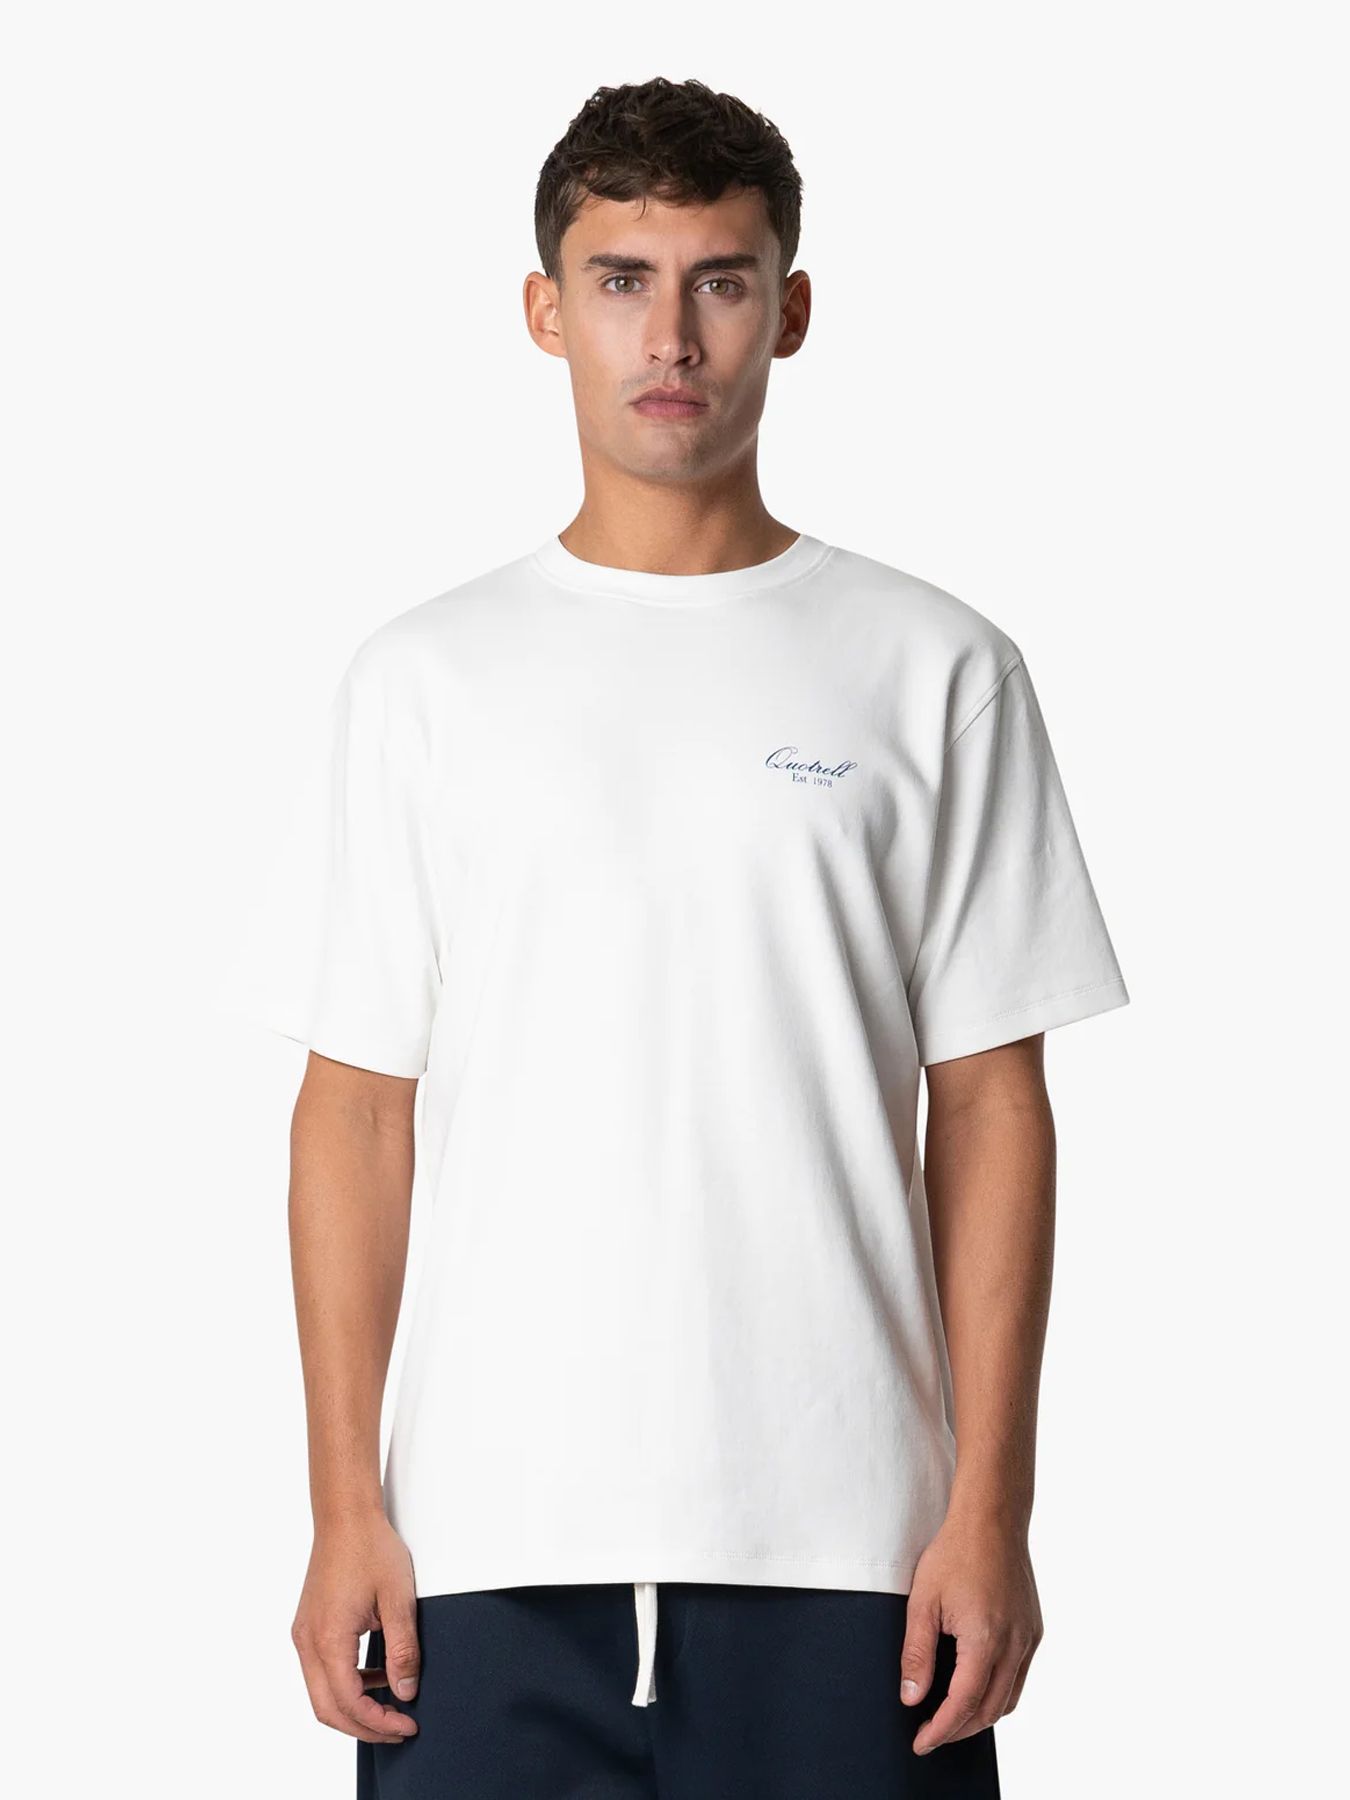 Quotrell Royal t-shirt White/blue 00107929-WBLU